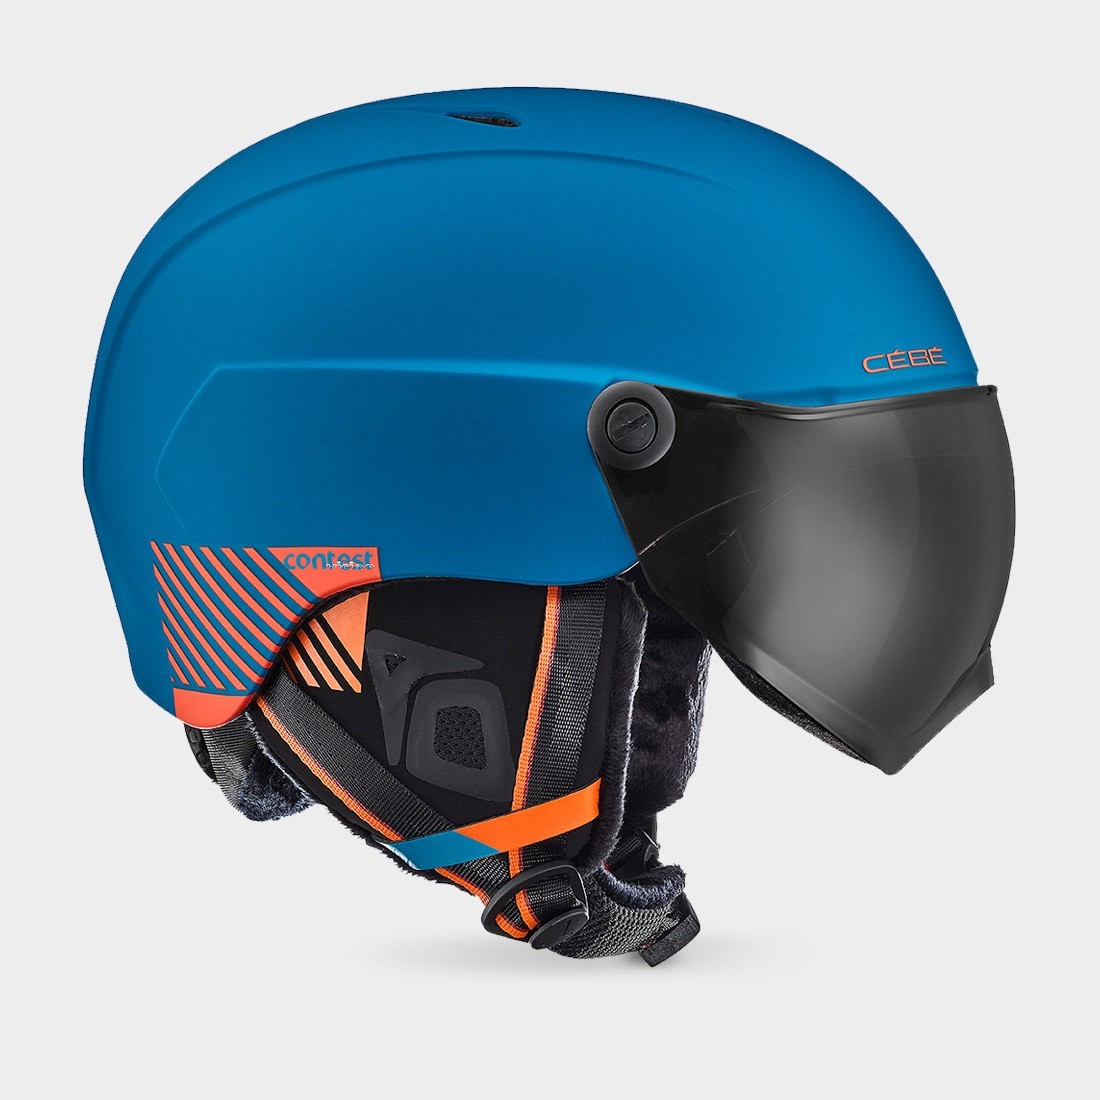 cebe-contest-vision-casque-ski-visiere-bleu-orange